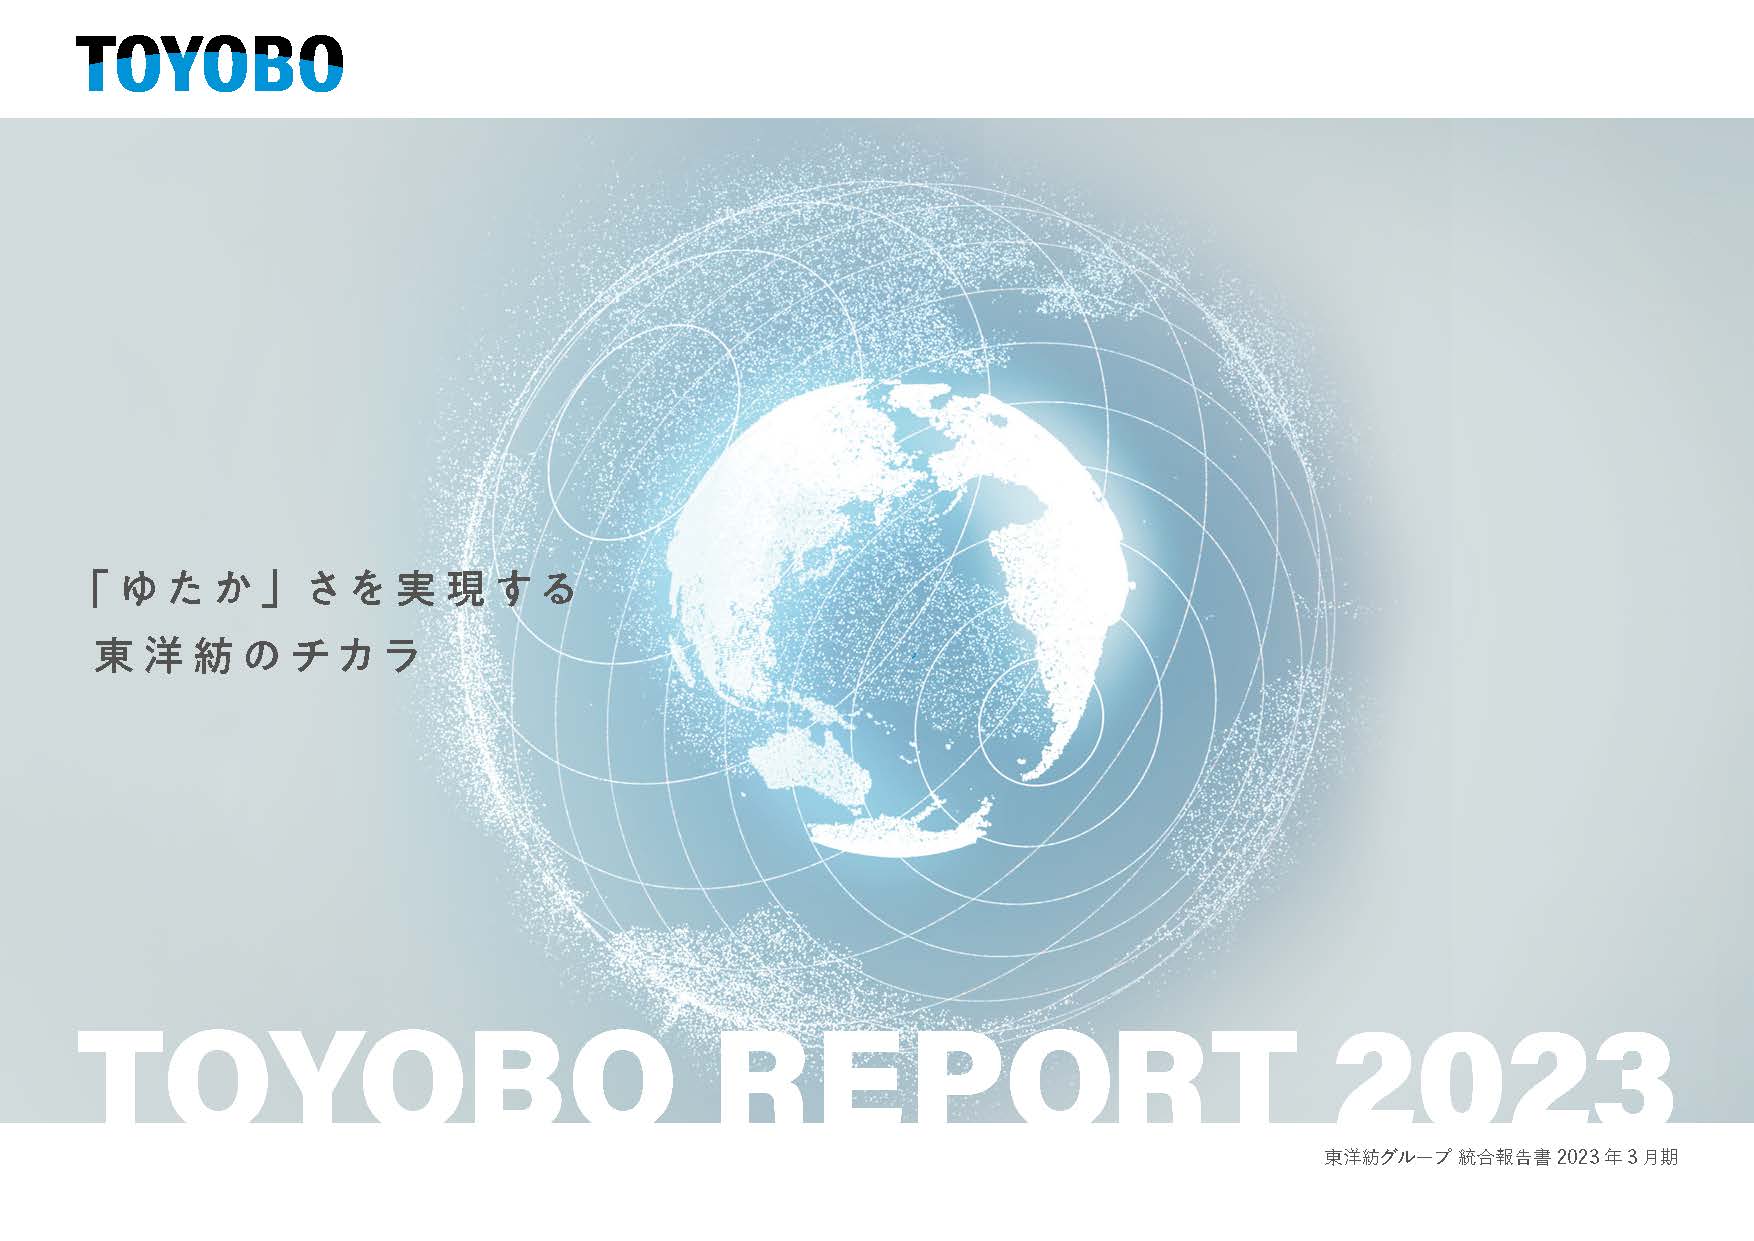 TOYOBO REPORT 2023